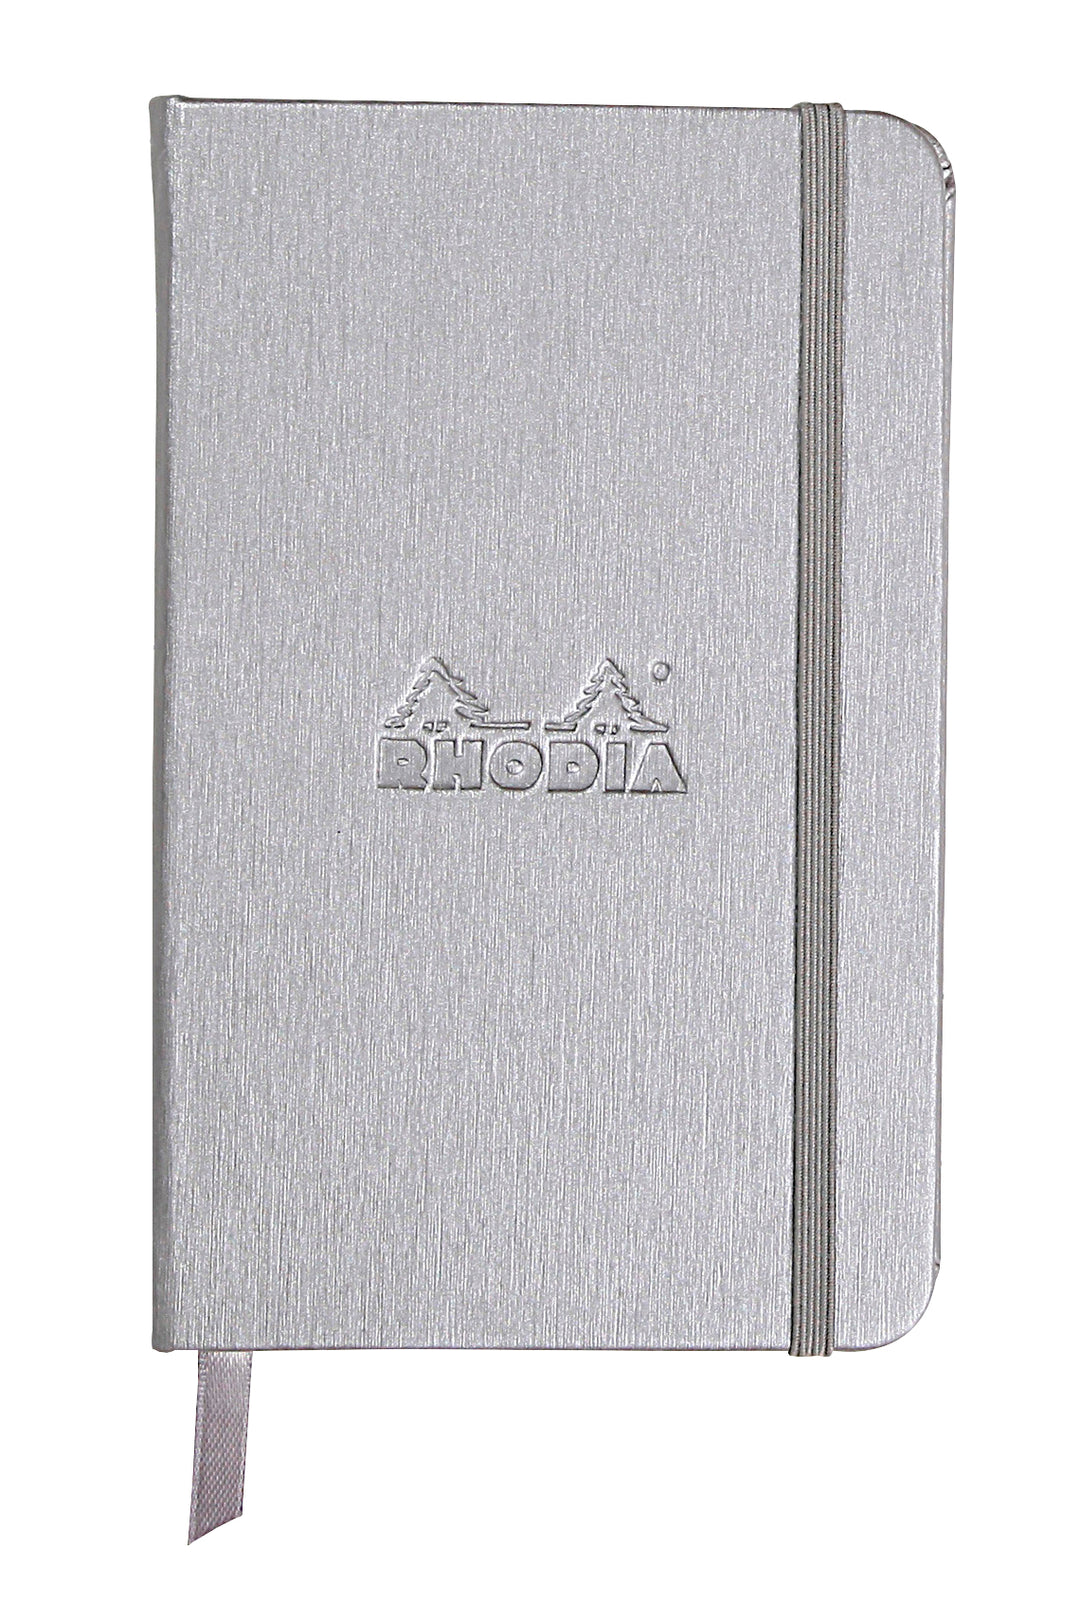 Rhodia Boutique Hardbound Line Ruled Webnotebook - A5